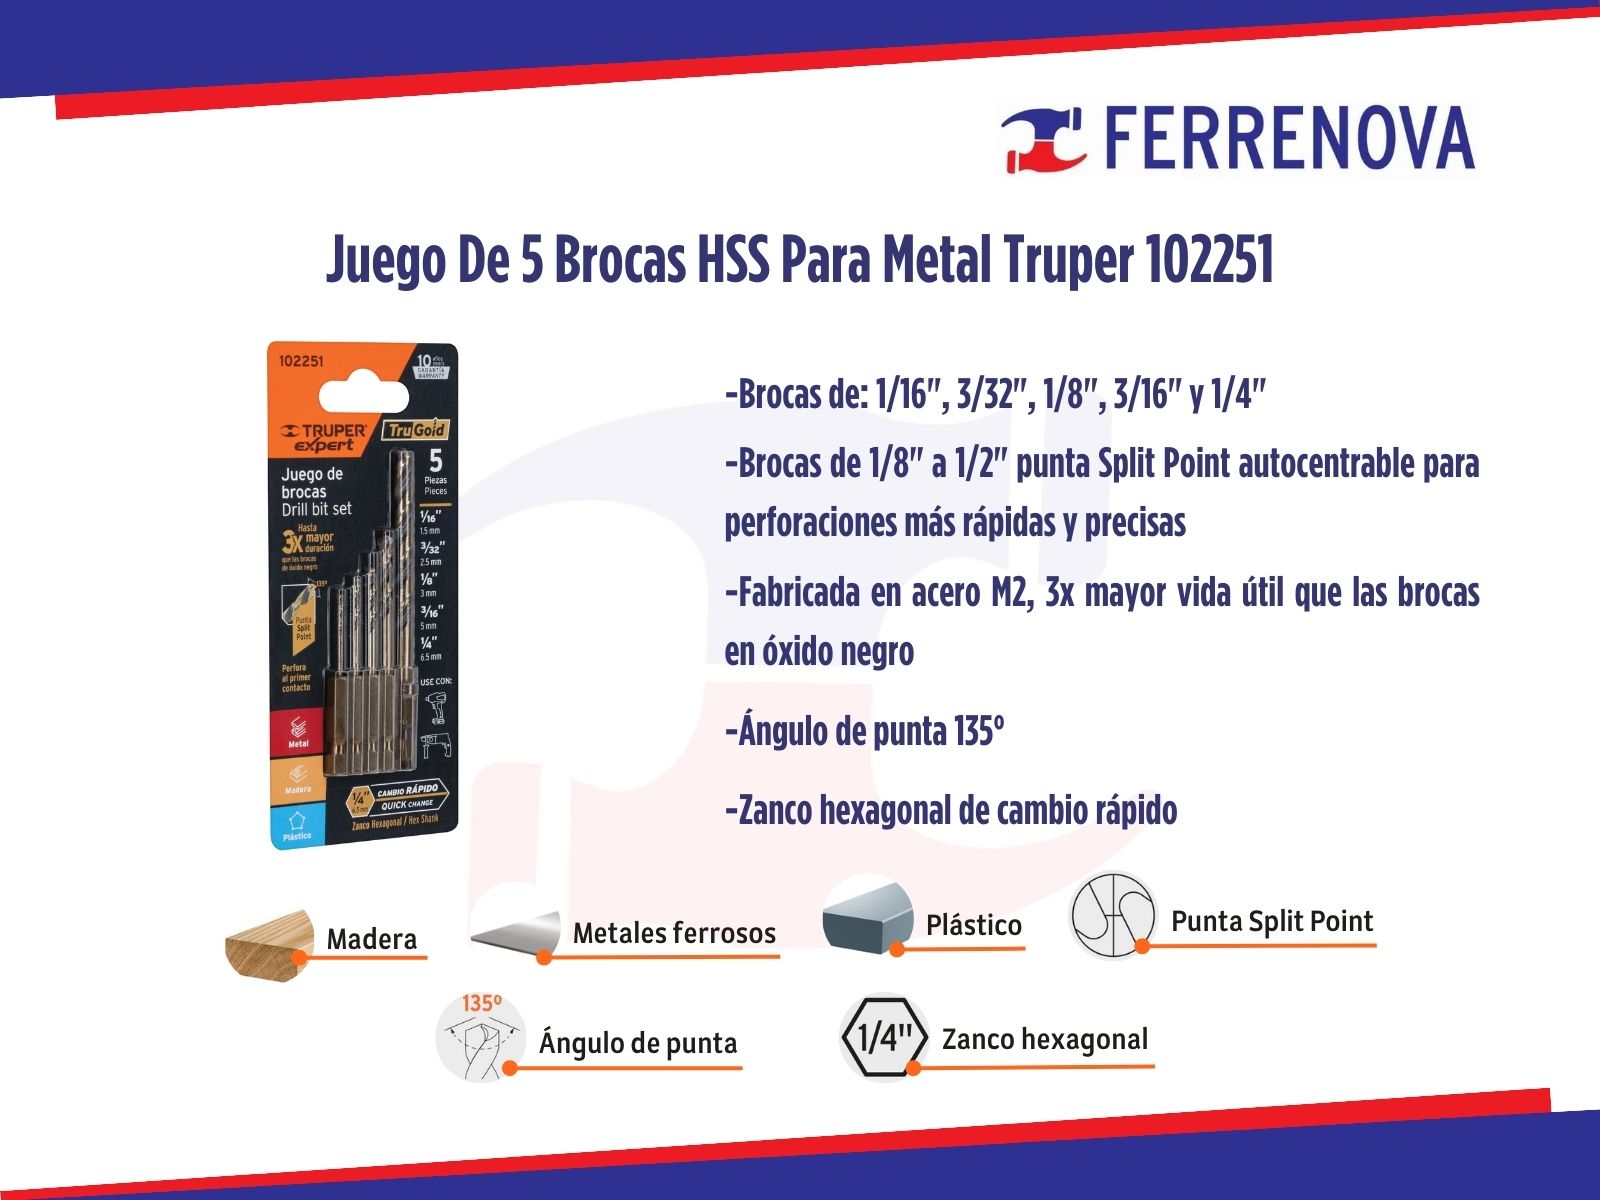 Juego De 5 Brocas HSS Para Metal Truper 102251